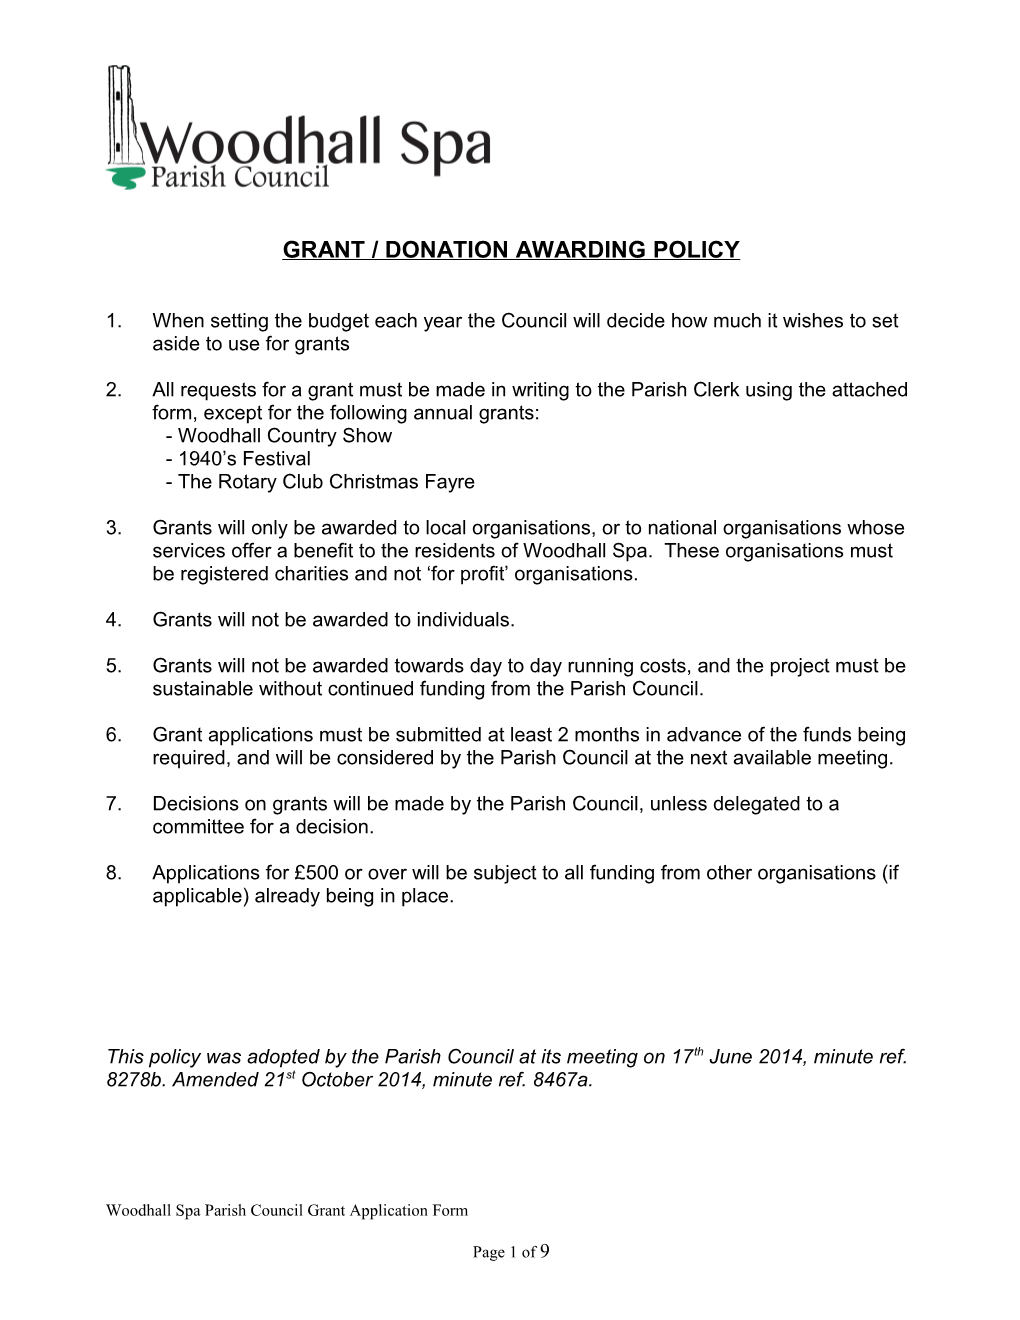 Woodhall Spa Parish Council Grant Application Procedures